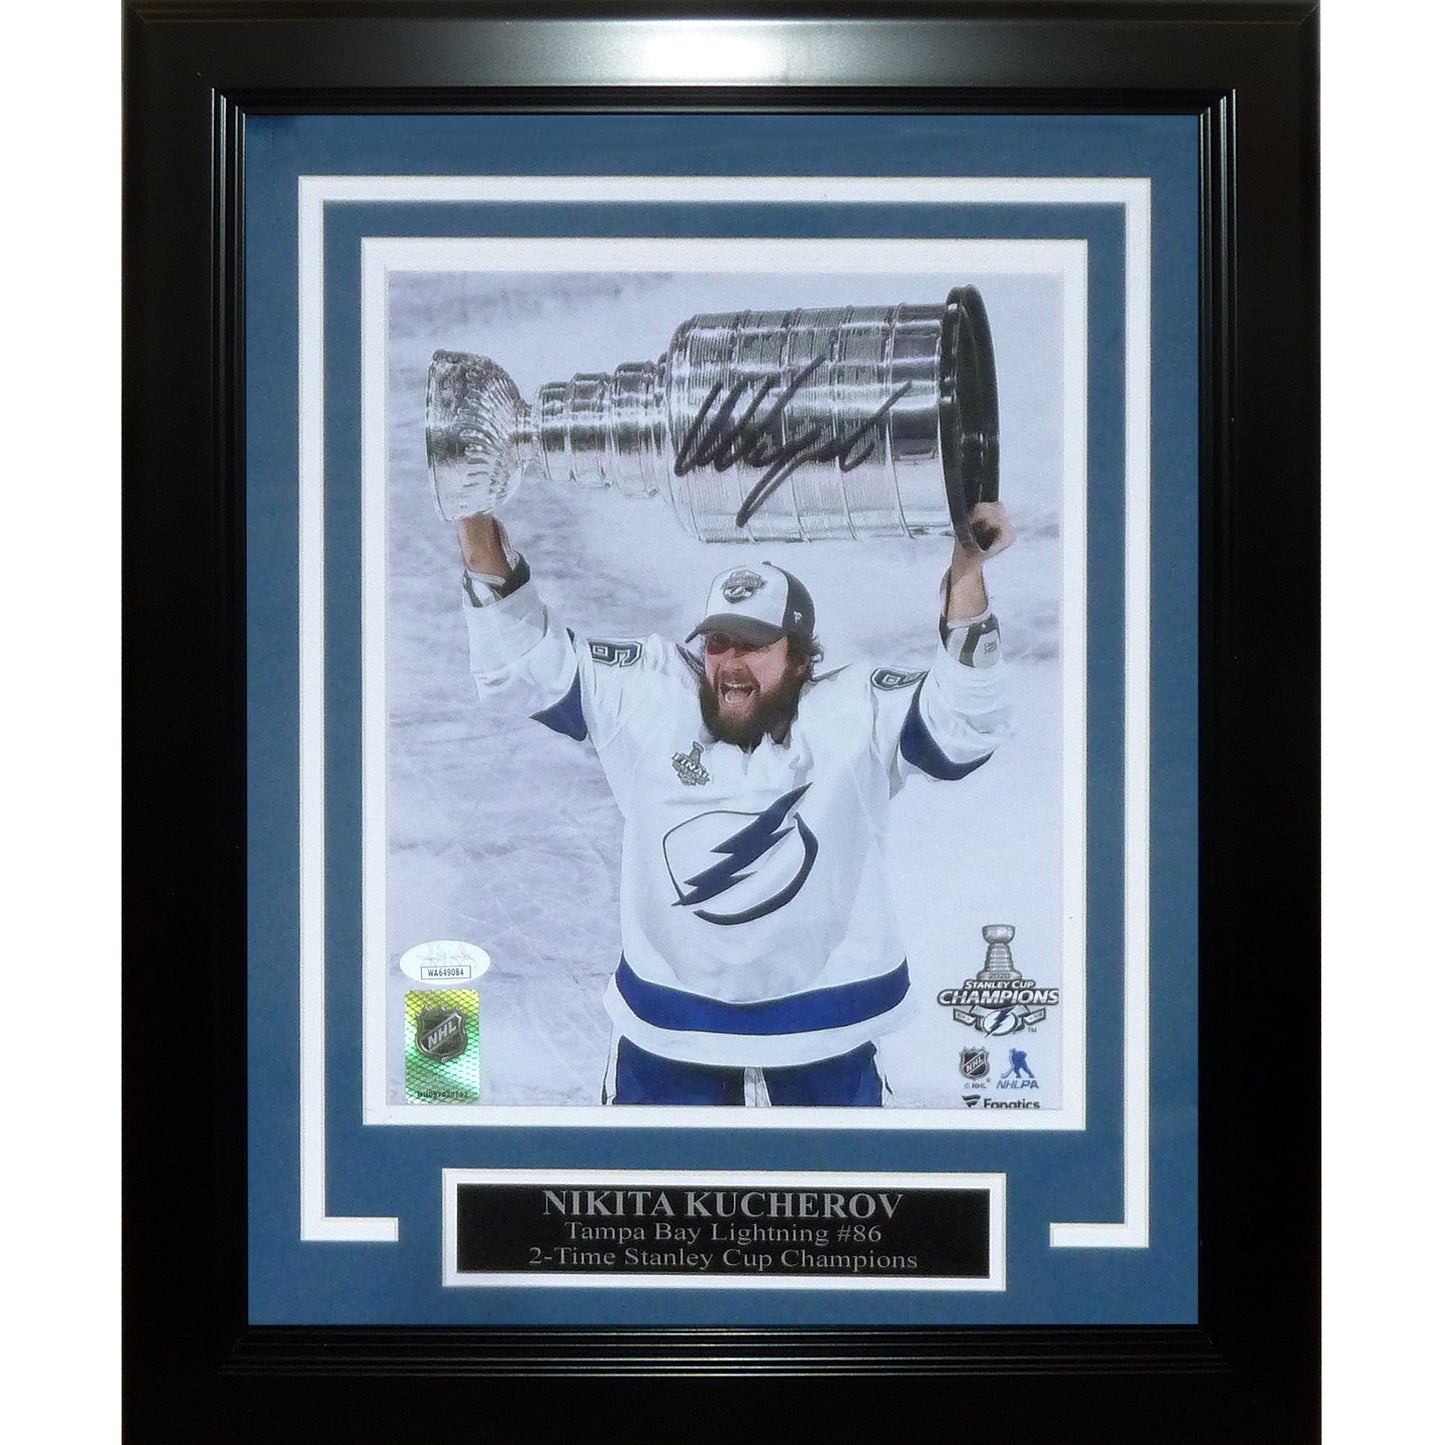 Nikita Kucherov Autographed Tampa Bay Lighting (2020 Stanley Cup Trophy) Framed 8x10 Photo - JSA